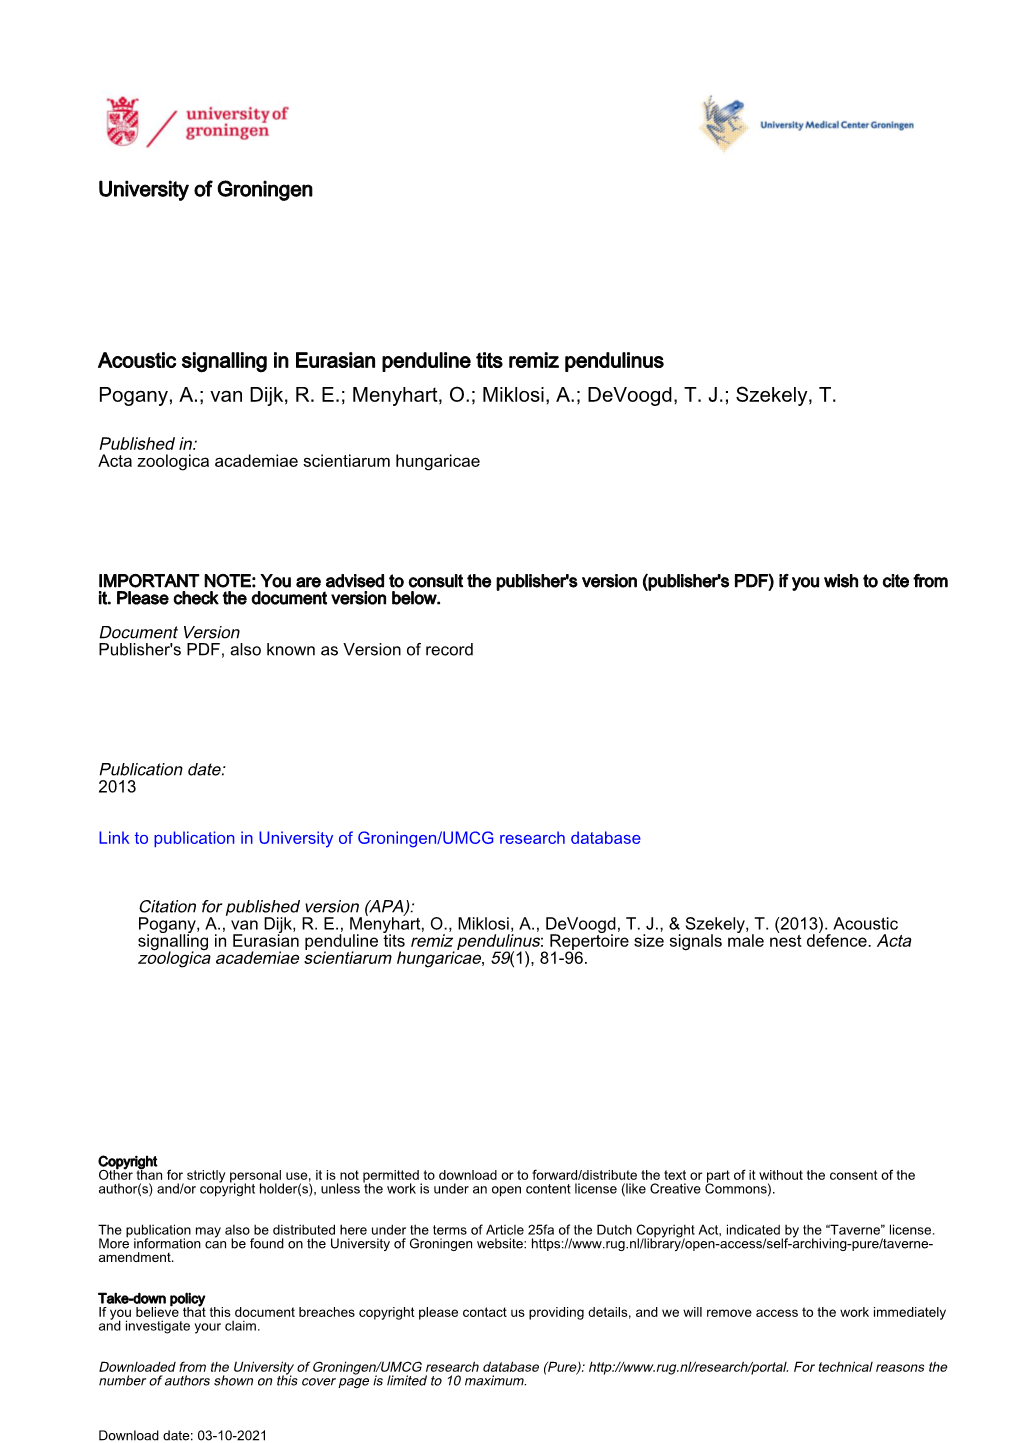 Acoustic Signalling in Eurasian Penduline Tits Remiz Pendulinus Pogany, A.; Van Dijk, R